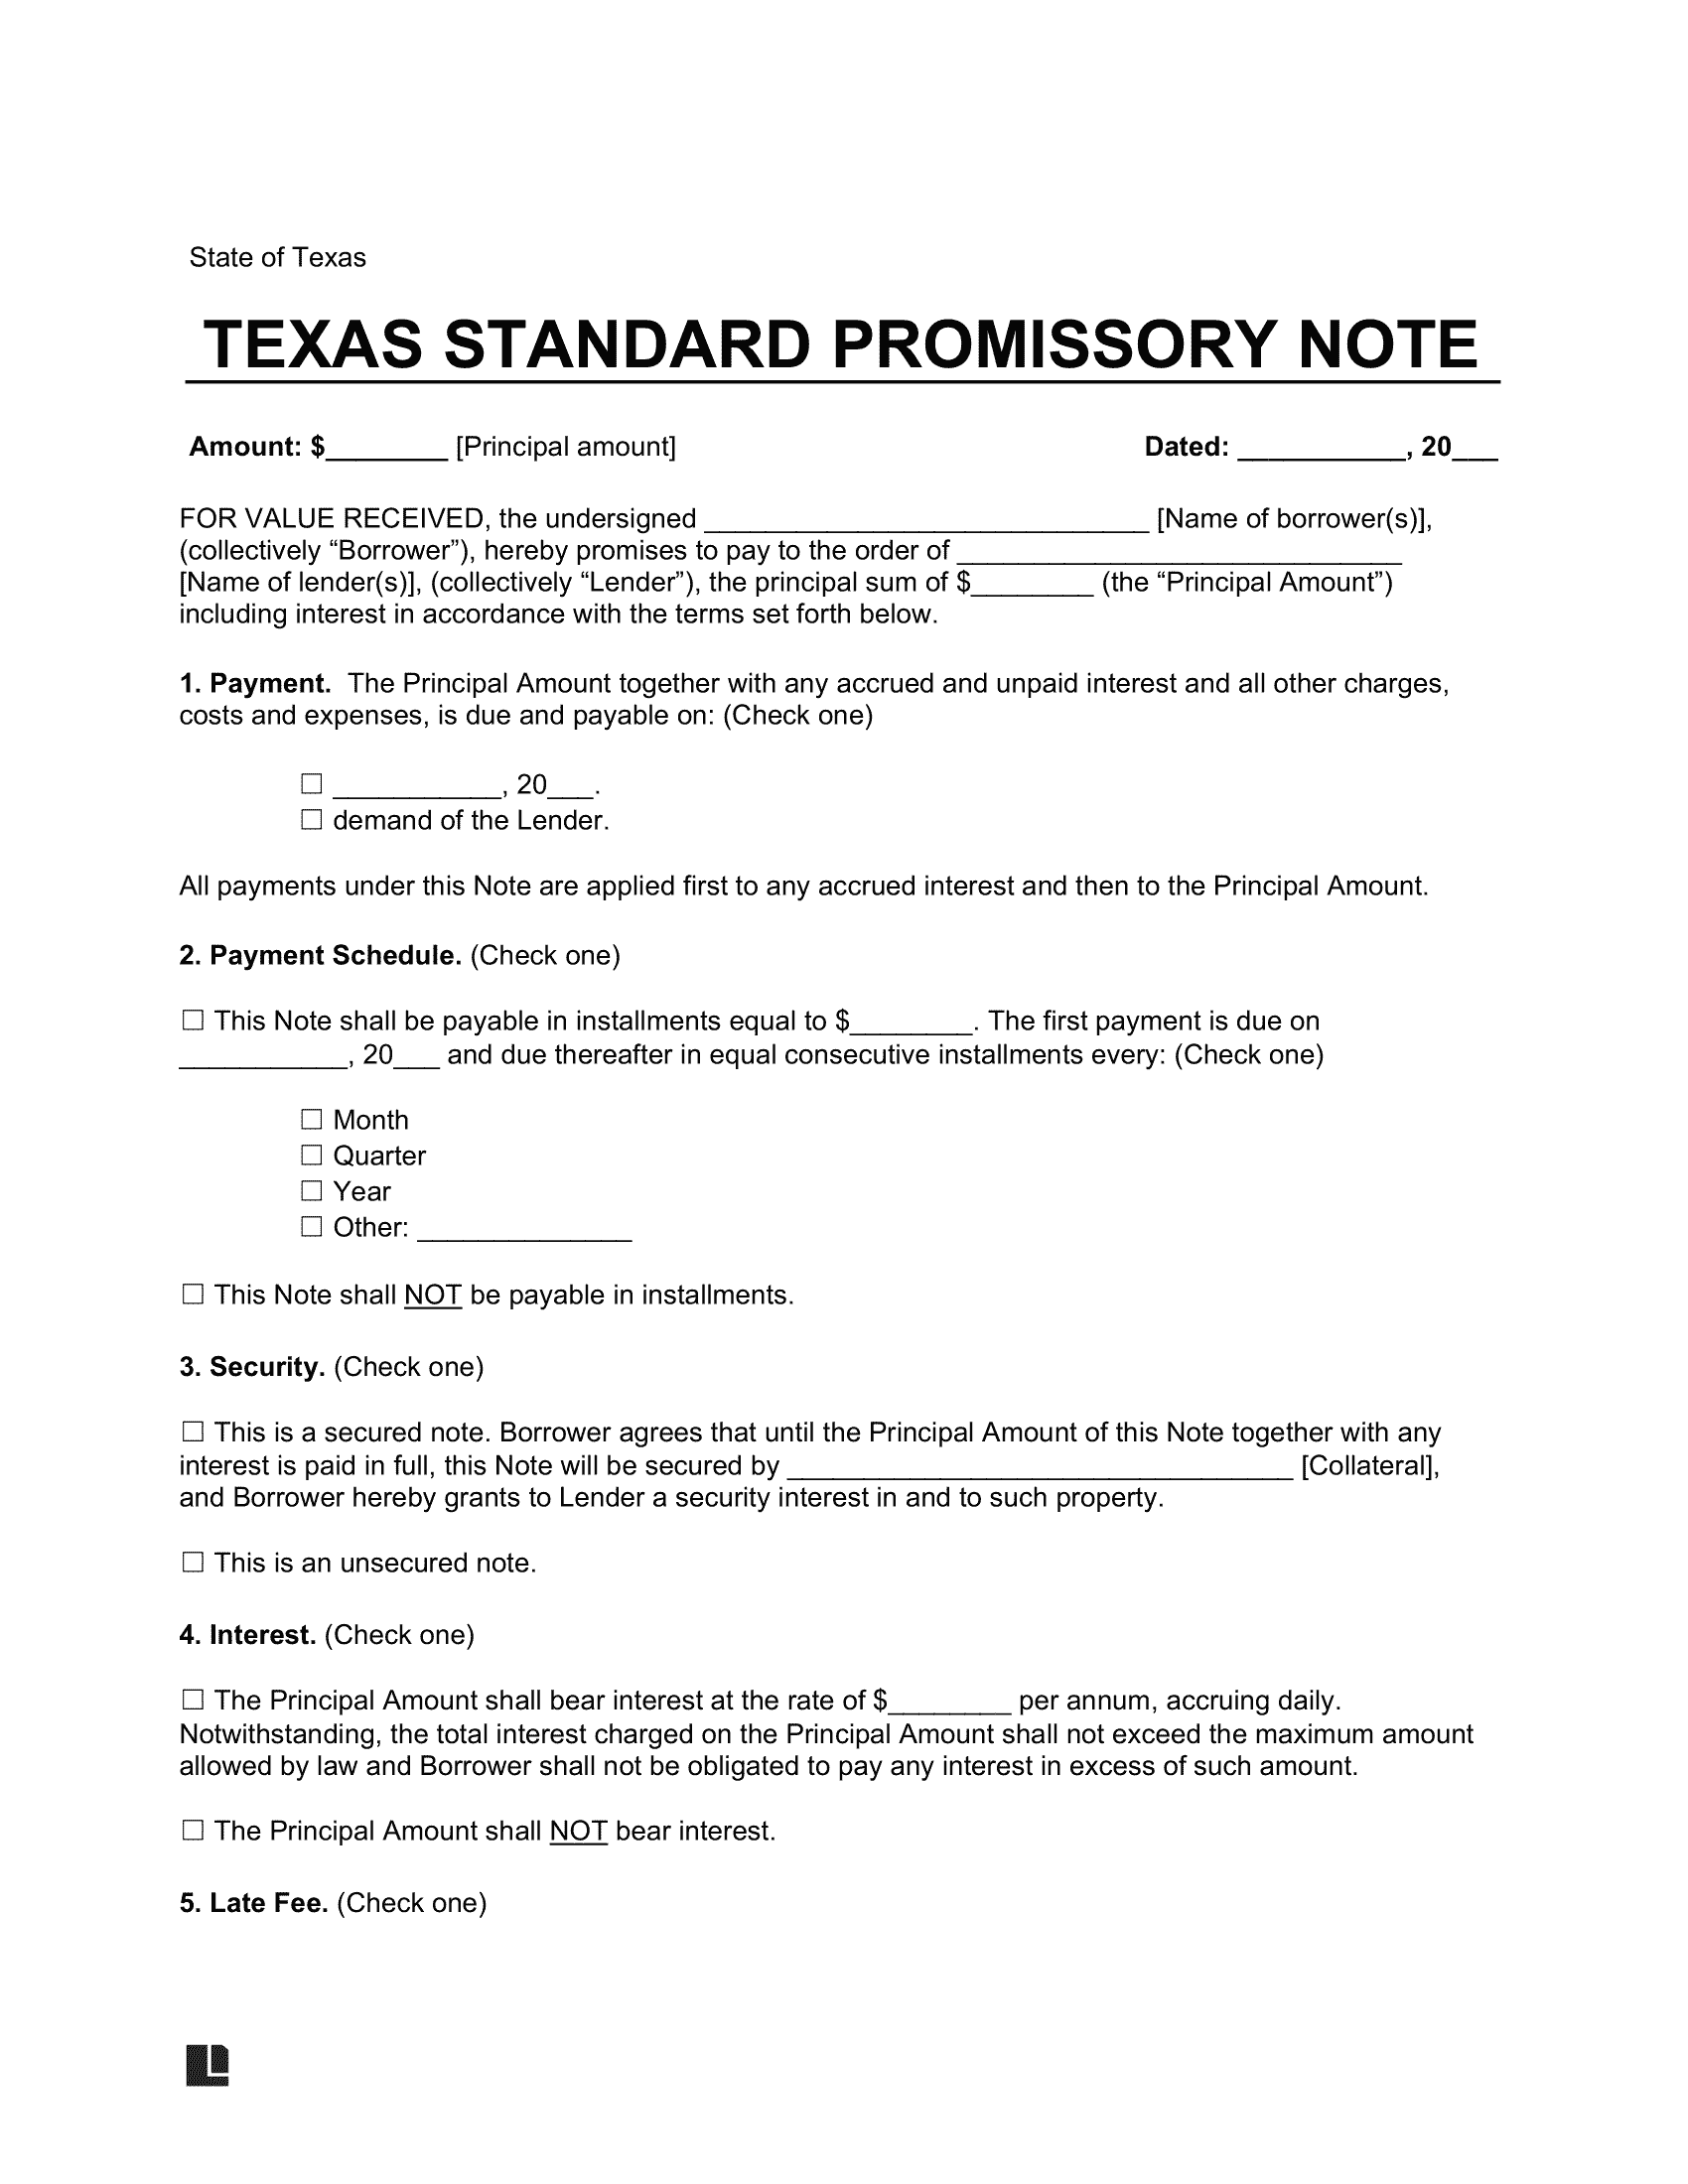 Texas Standard Promissory Note Template